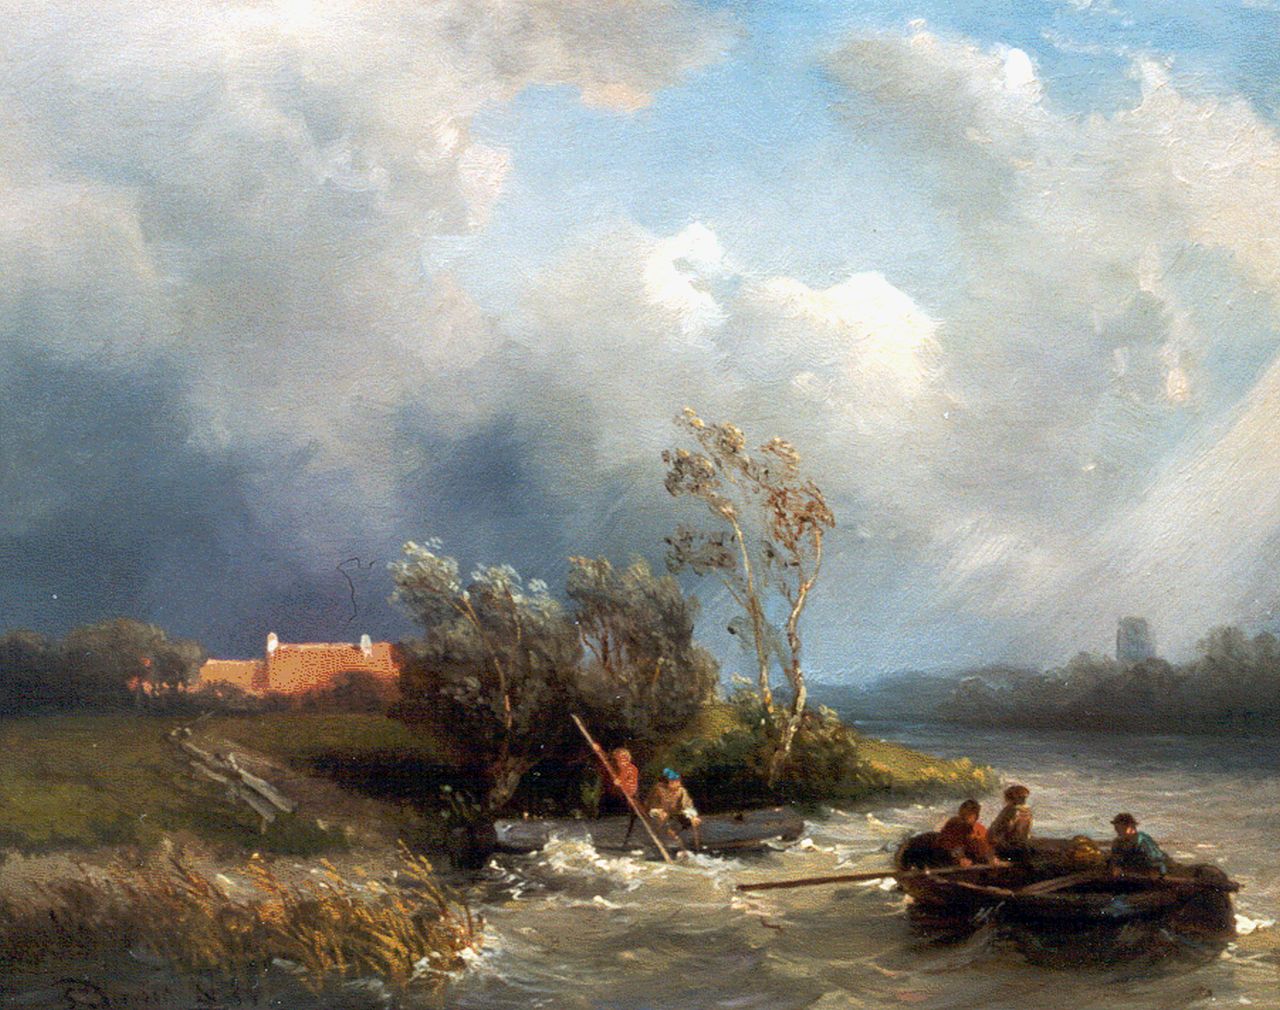 Verveer S.L.  | 'Salomon' Leonardus Verveer, Fishermen in a barge on a choppy river, Öl auf Holz 19,8 x 24,7 cm, signed l.l. und dated '53